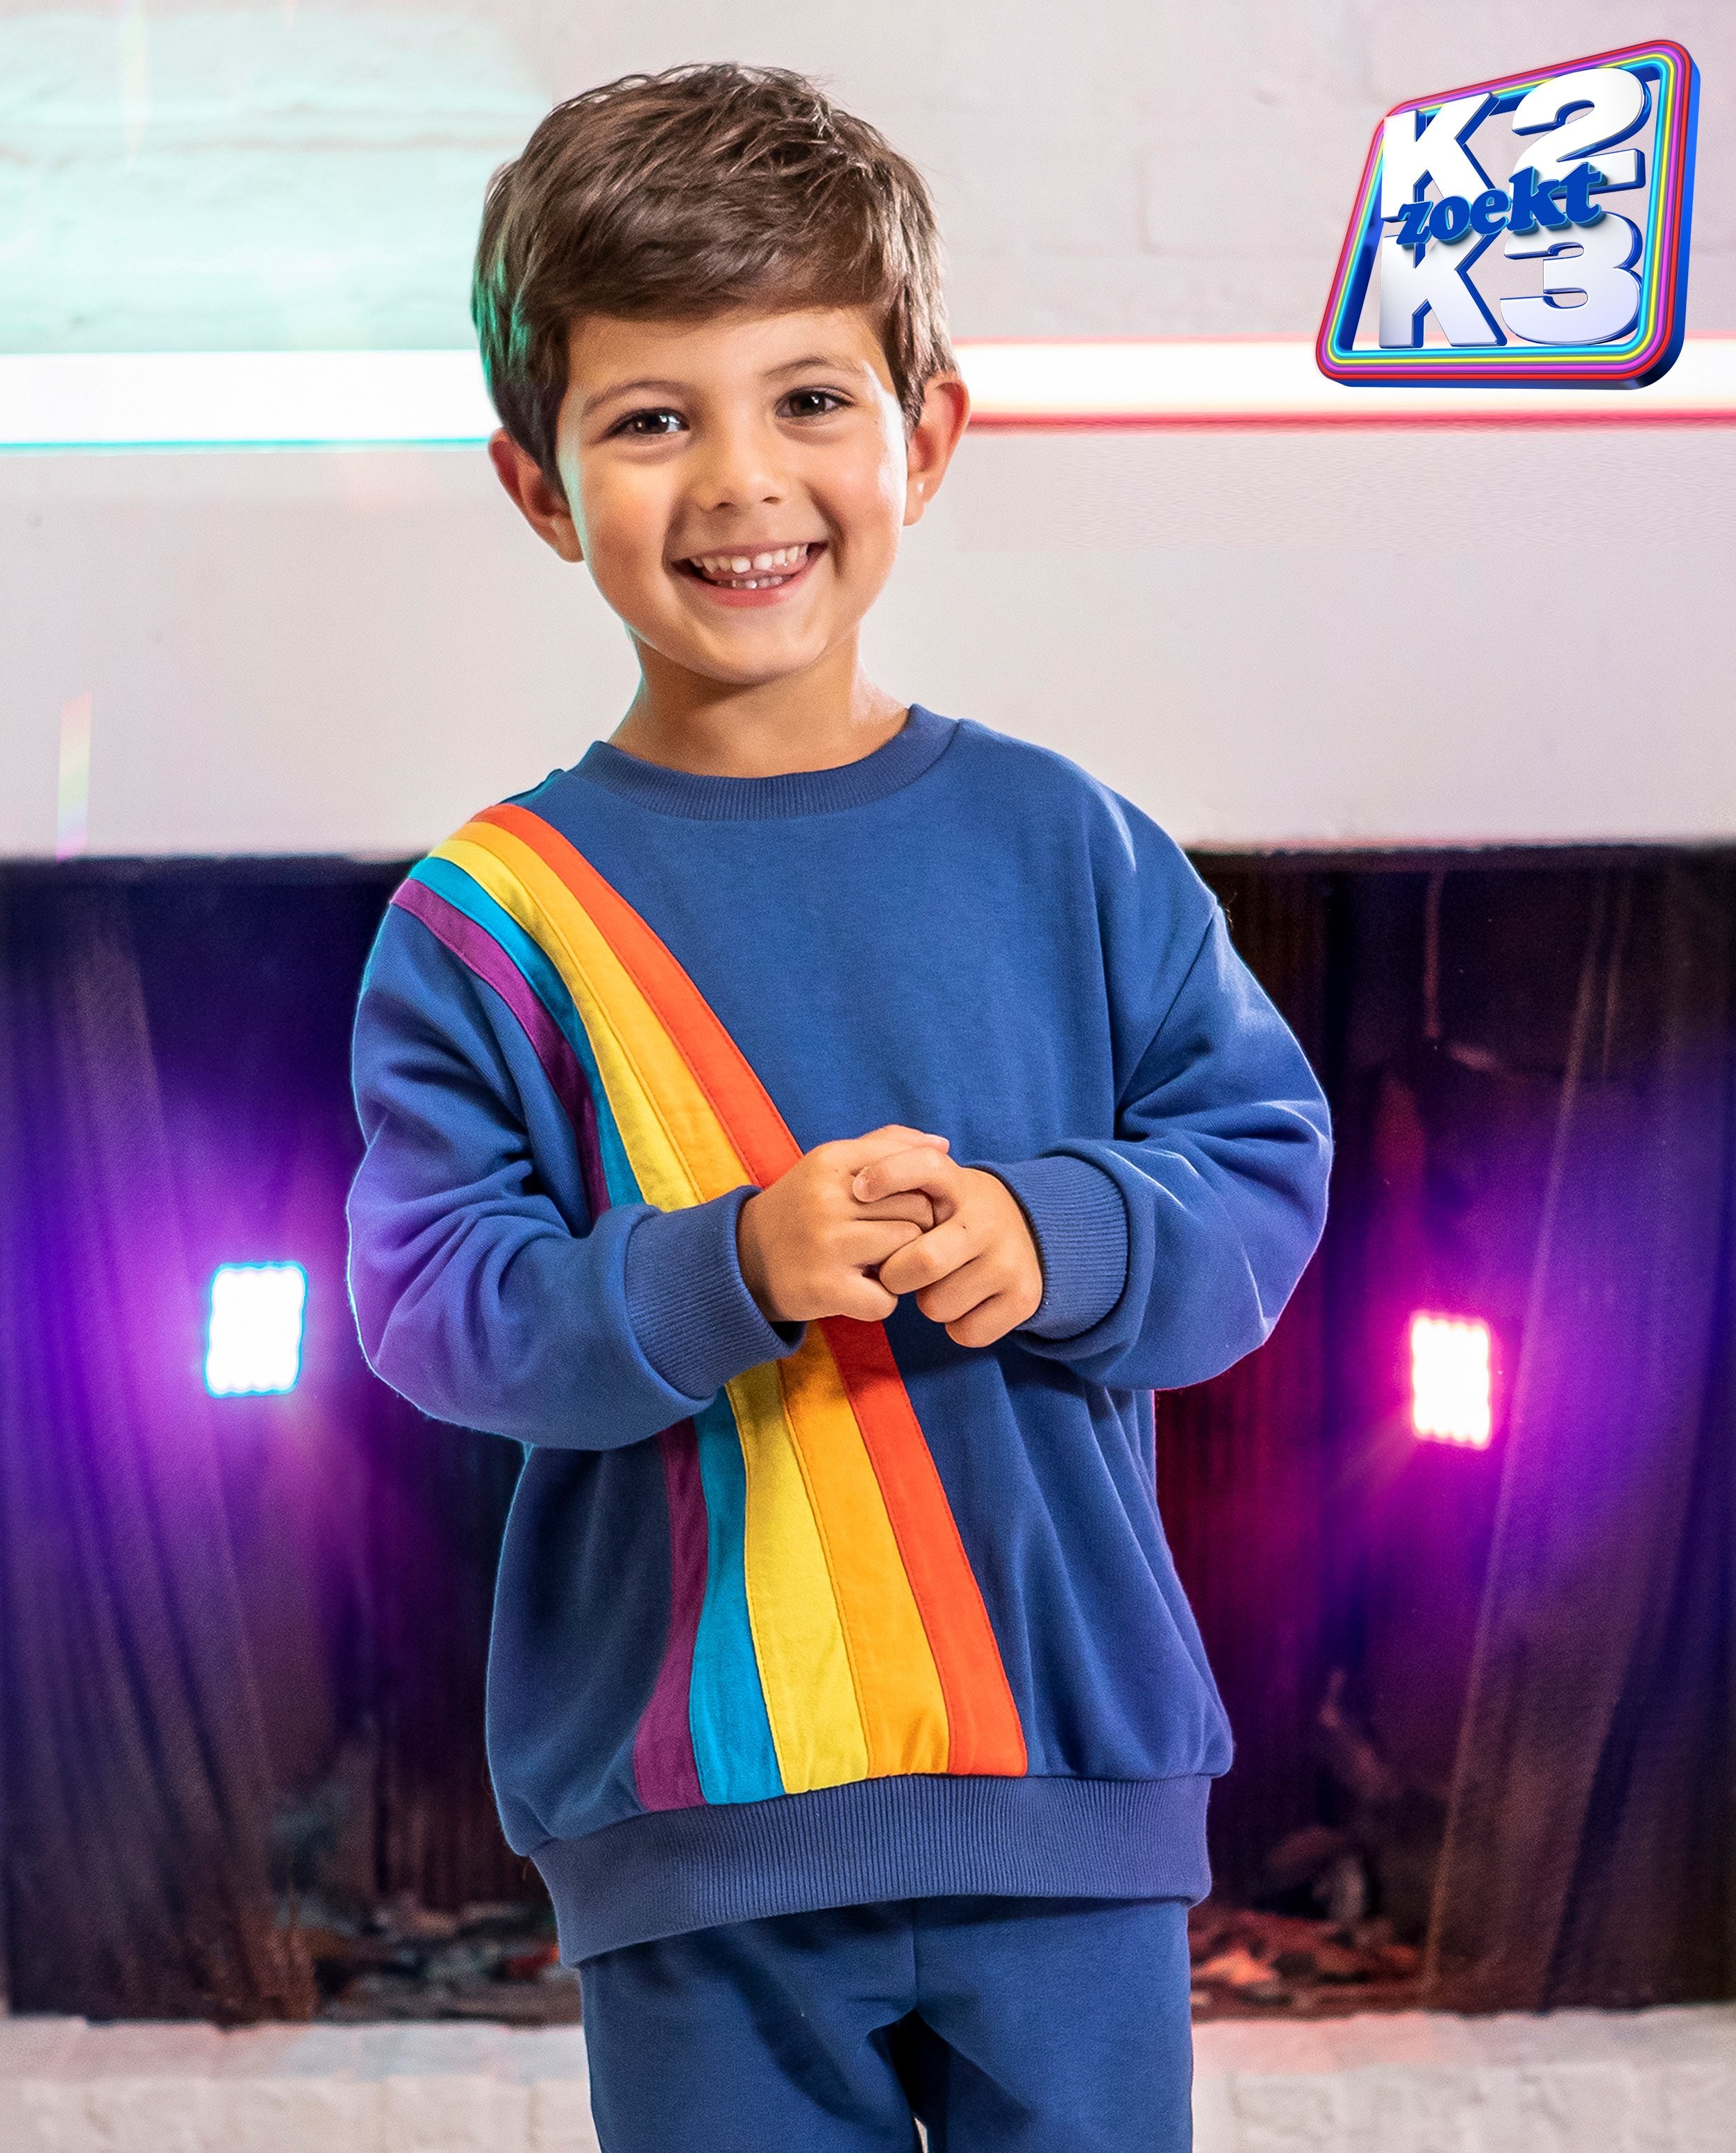 vonk Kinderrijmpjes Doelwit Unisex Kids Jogger Nieuwe Iconische K3-outfit | islamiyyat.com